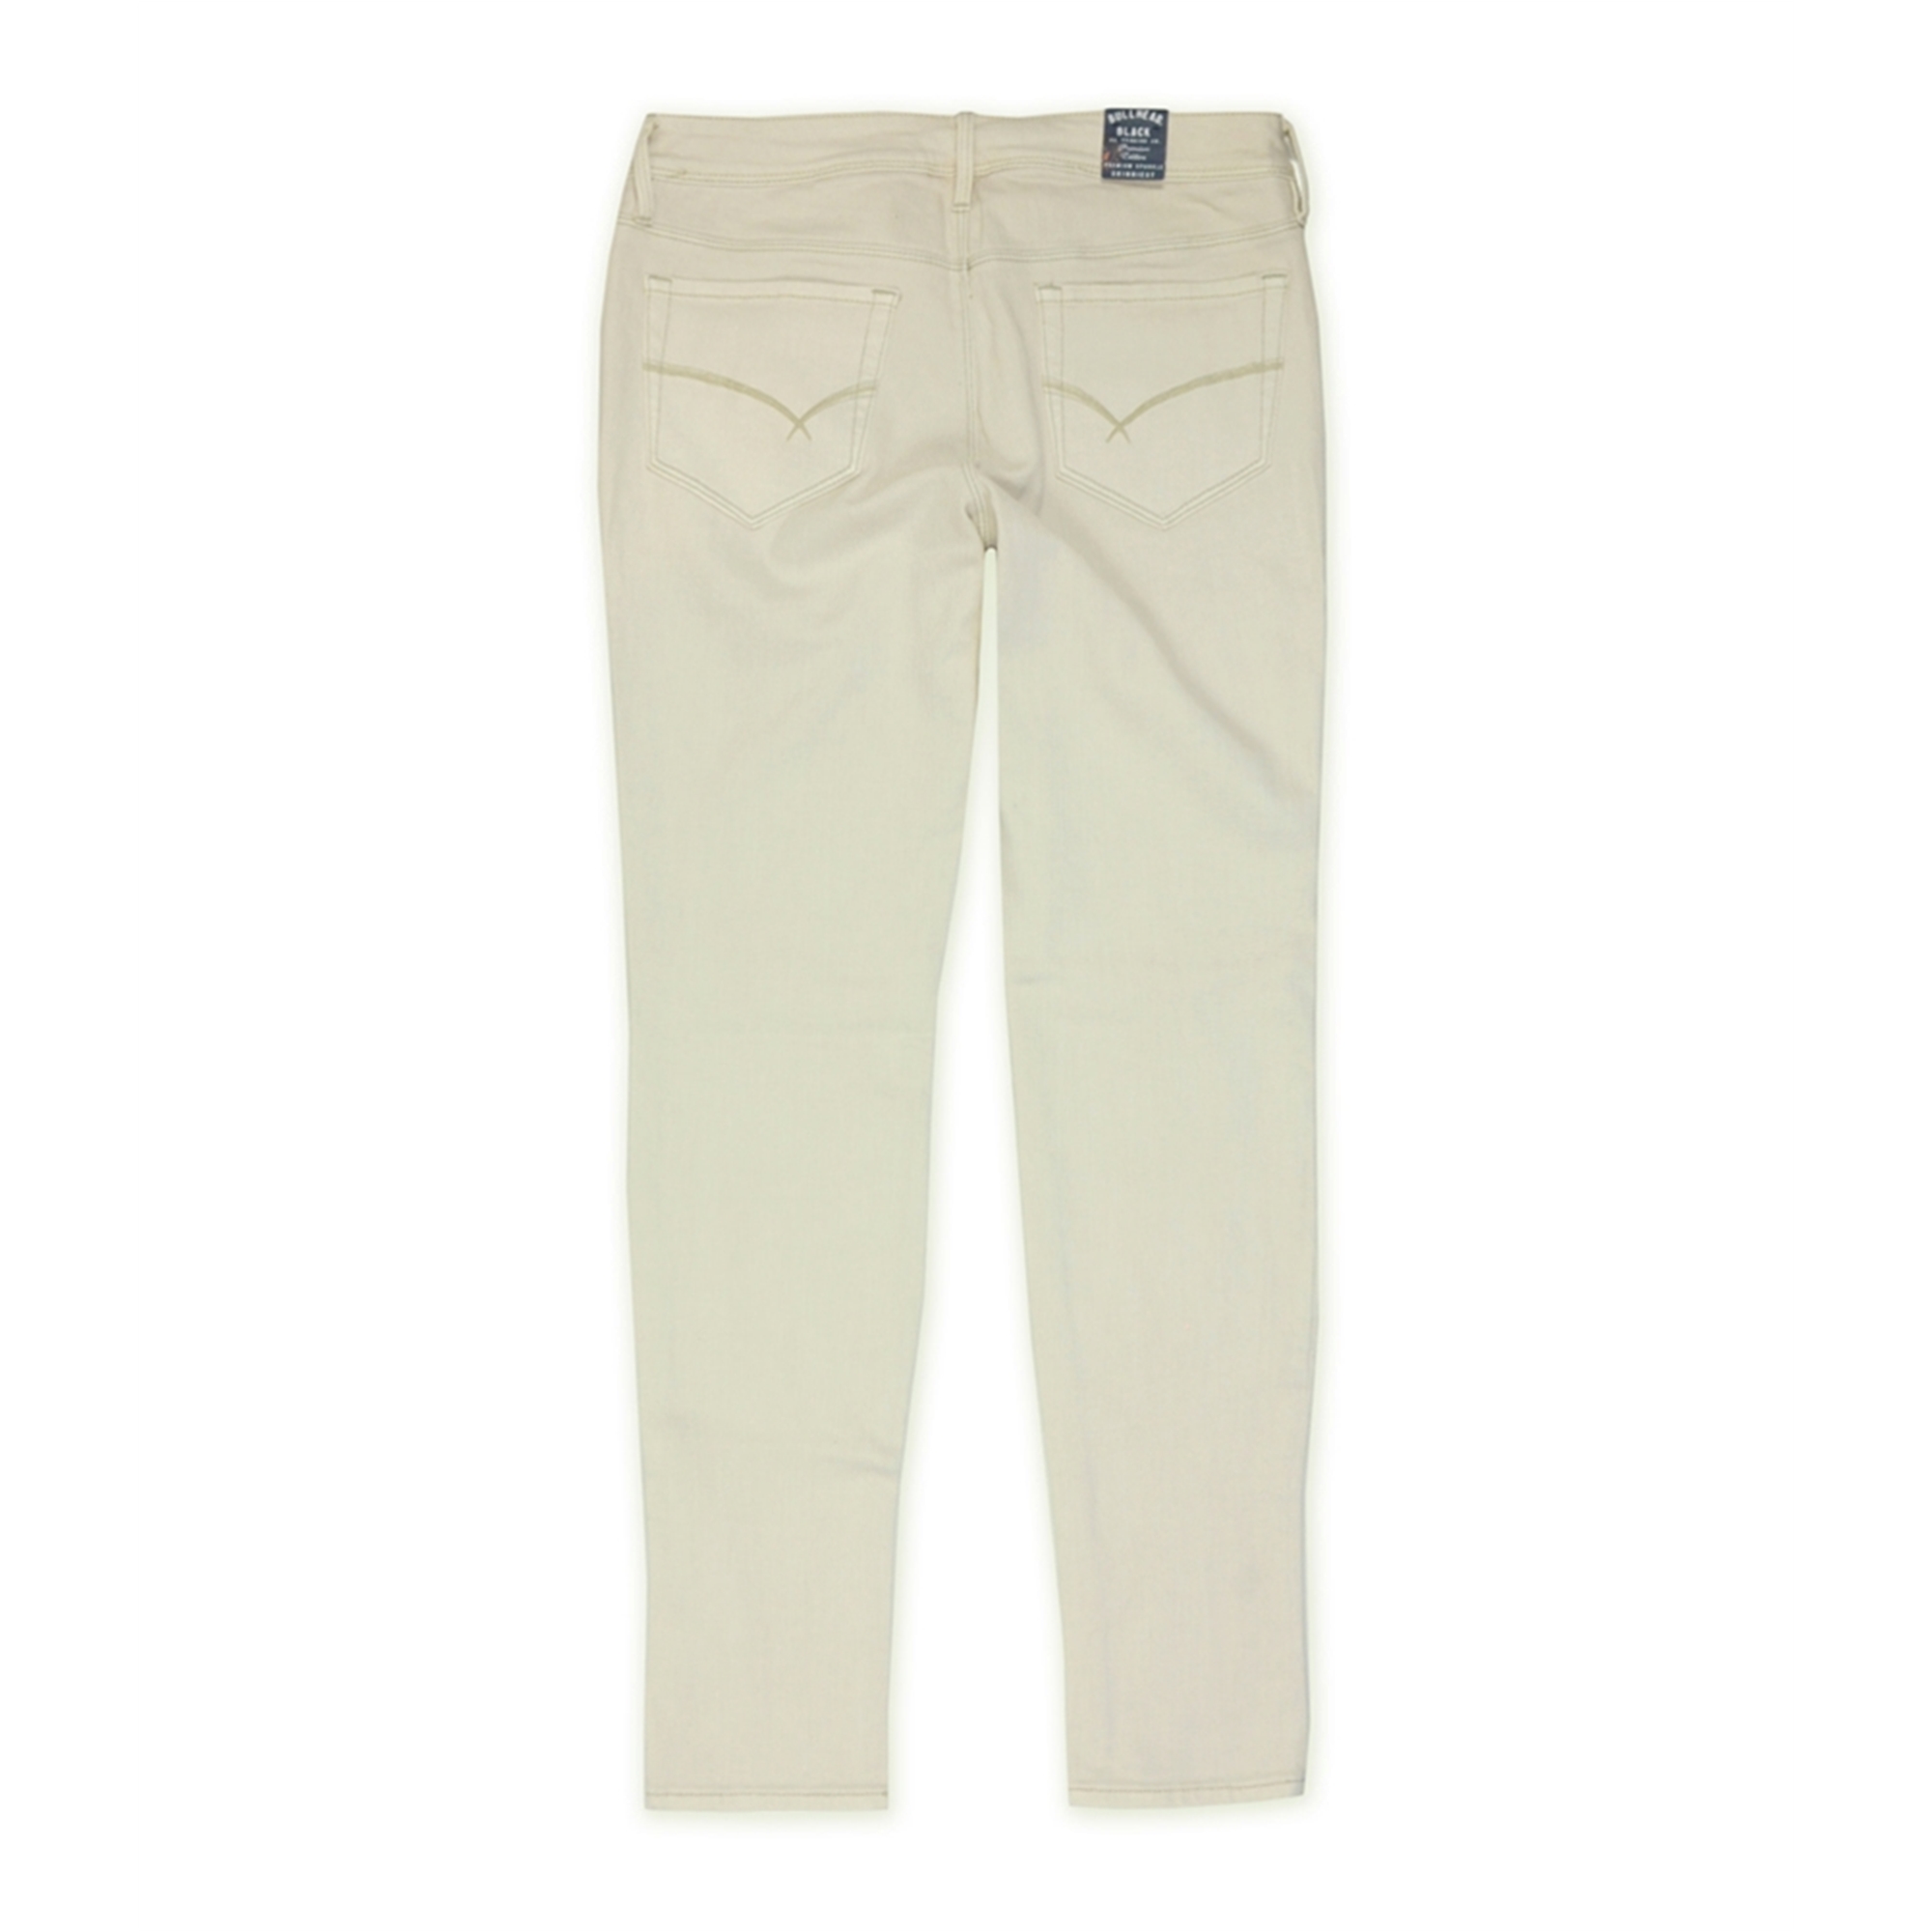 Bullhead Denim Co. Womens Premium Sparkle Skinniest Skinny Fit Jeans, Beige, 11 - image 2 of 2